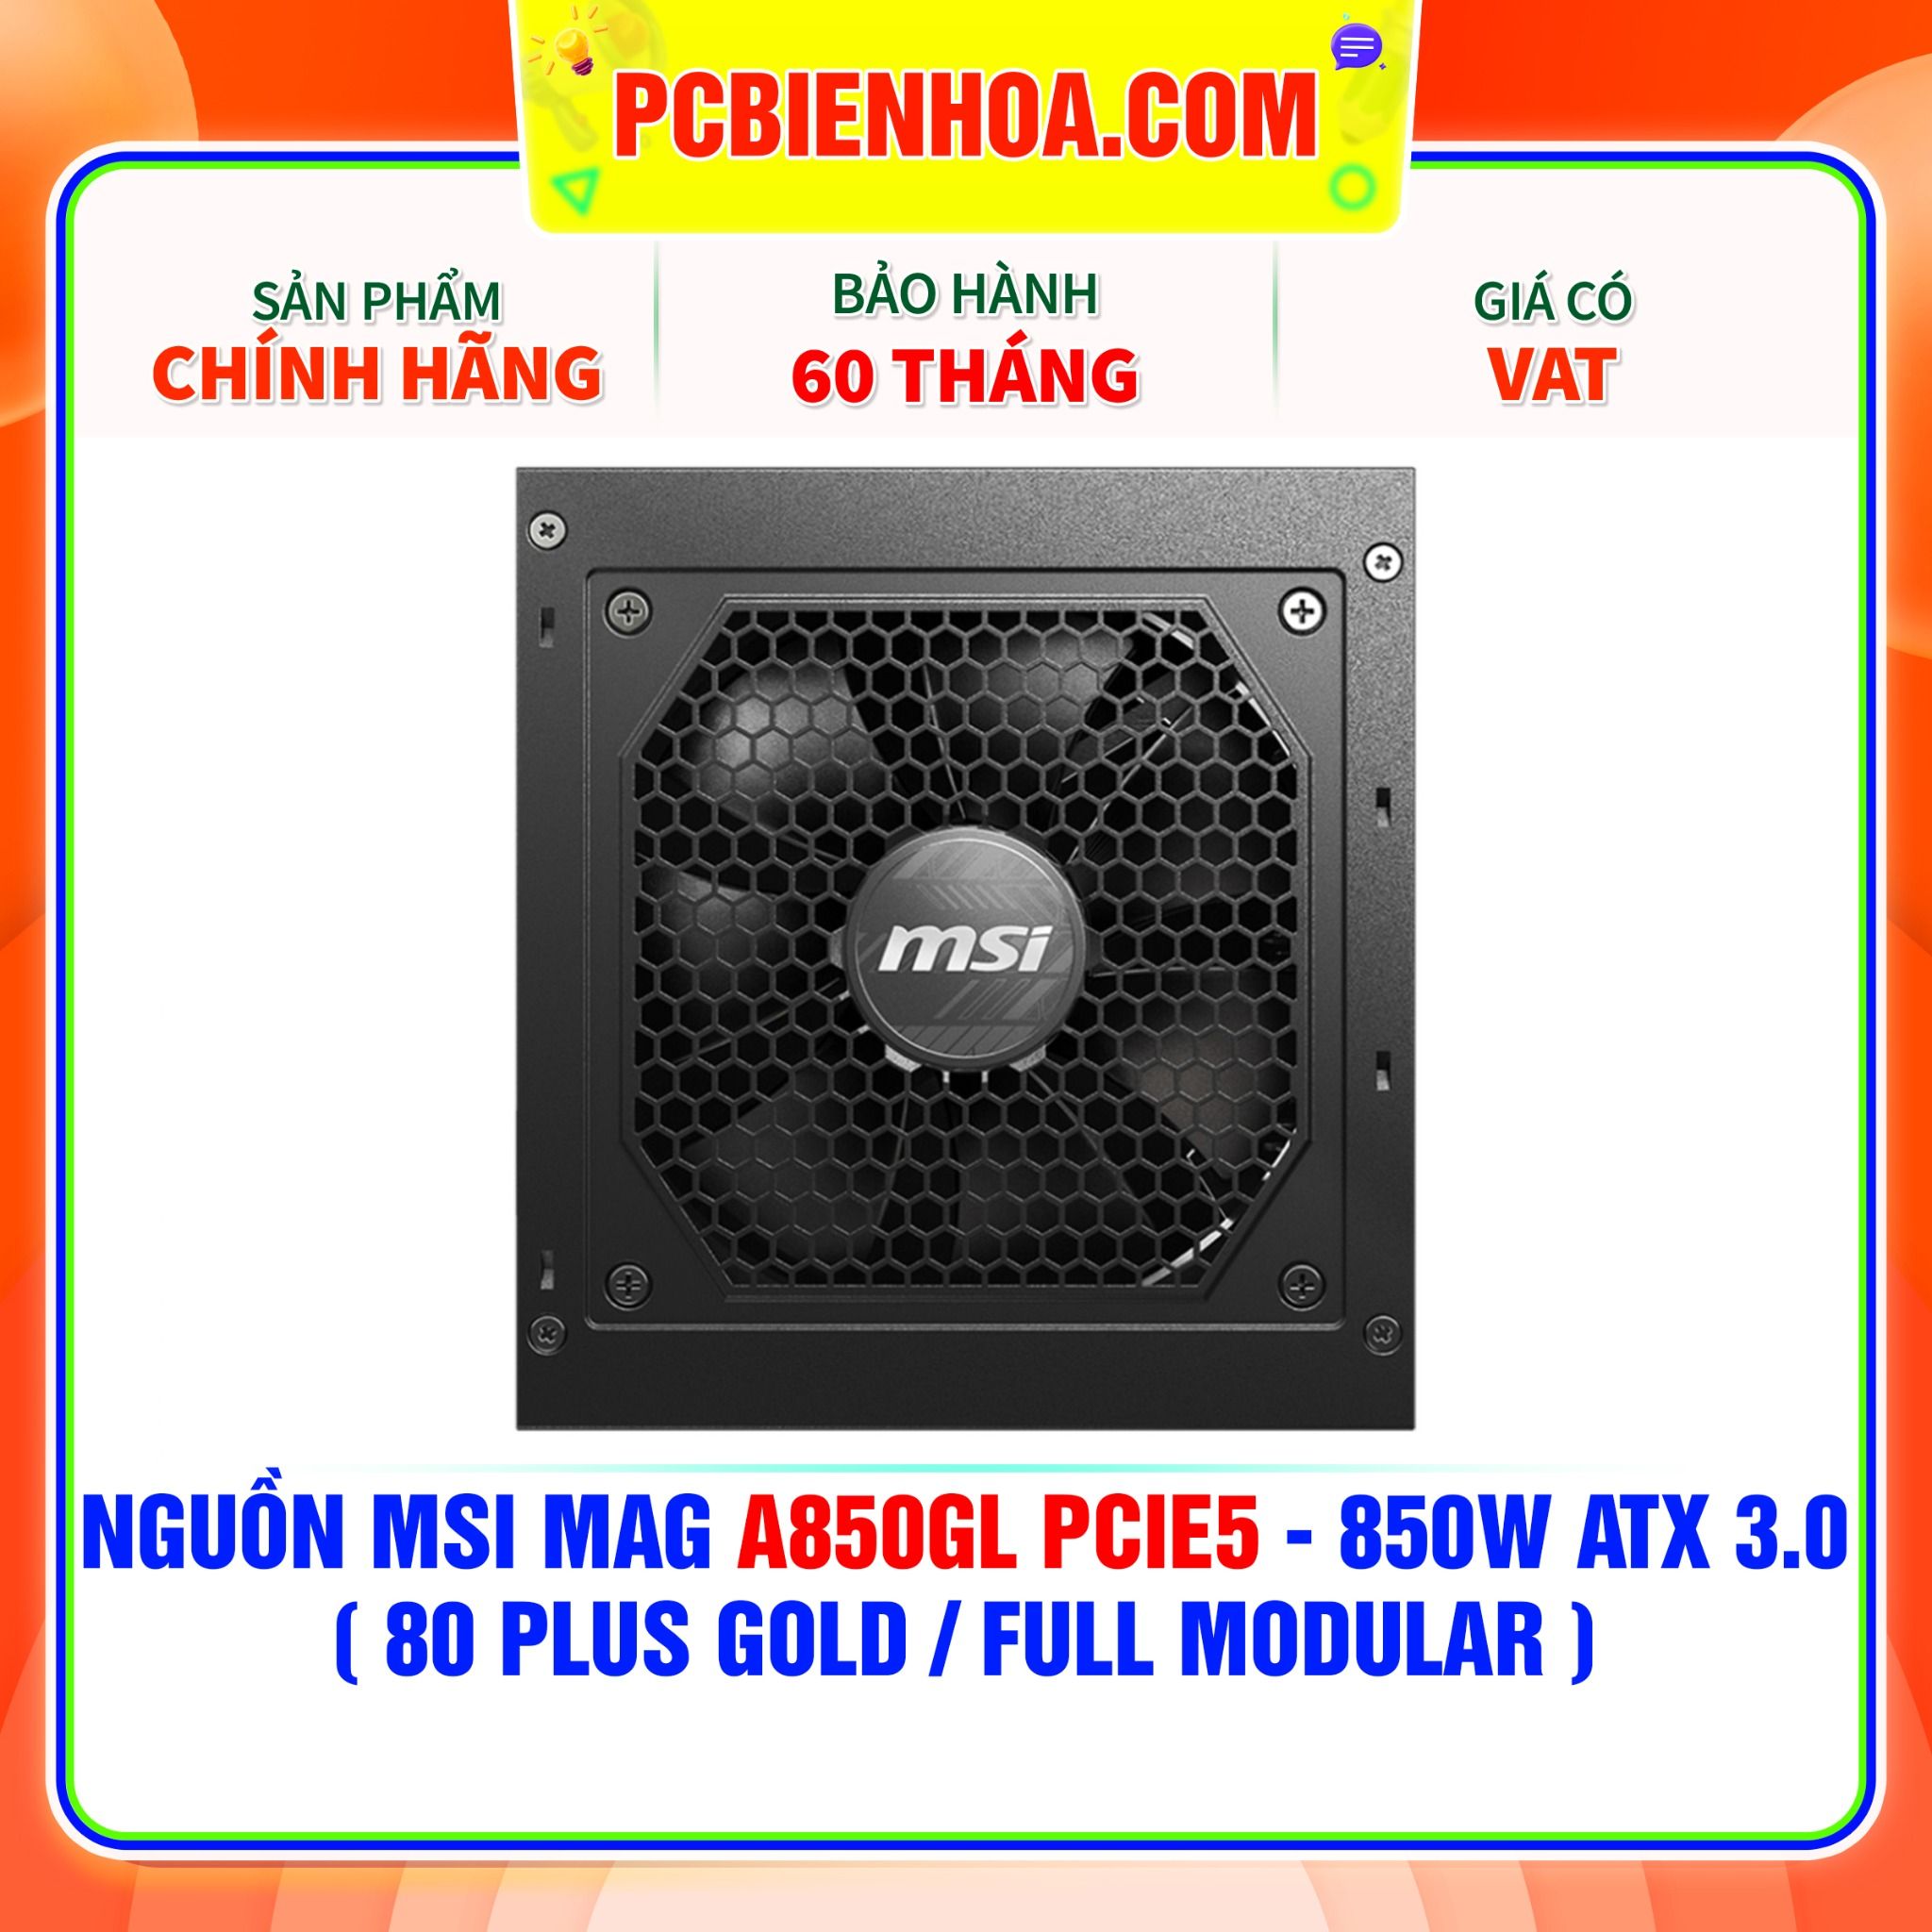  NGUỒN MSI MAG A850GL PCIE5 - 850W ATX 3.0 ( 80 PLUS GOLD / FULL MODULAR ) 